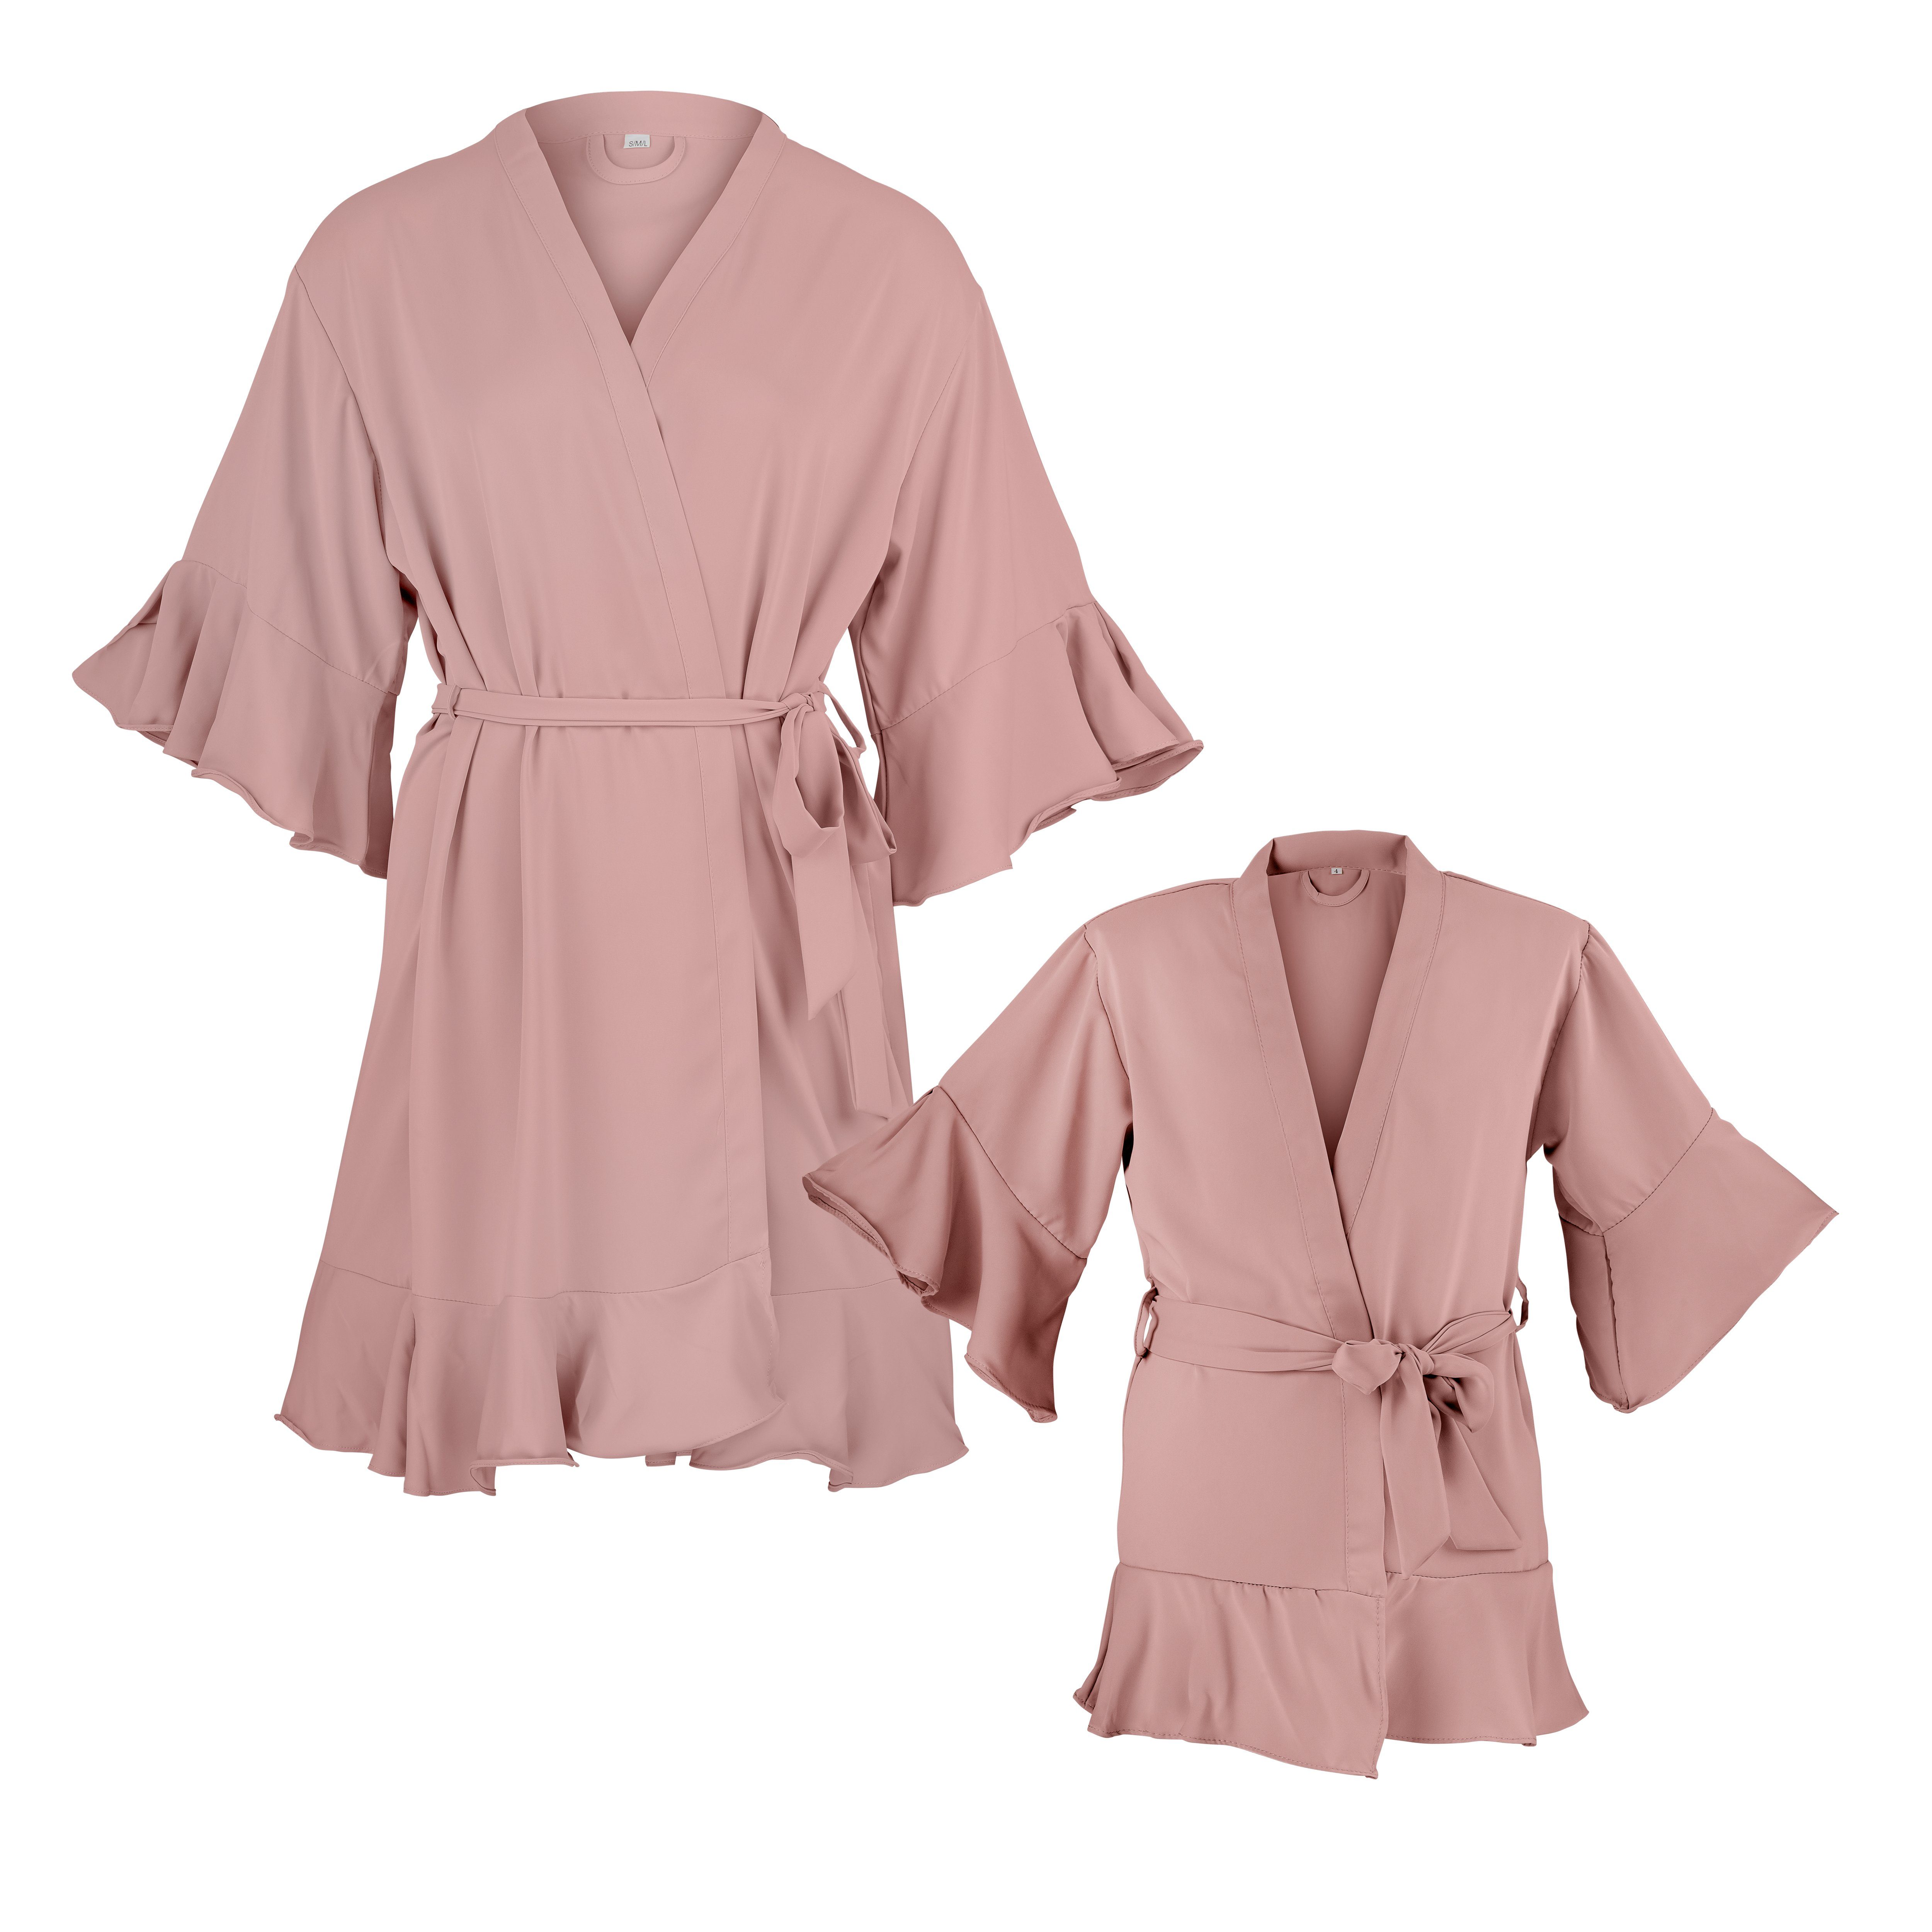 shopandmarry Kimono Kimono für Mutter und Tochter “ruffles”, Kimono-Kragen, Bindegürtel, Mini Me Set rosé | Damen Bademäntel